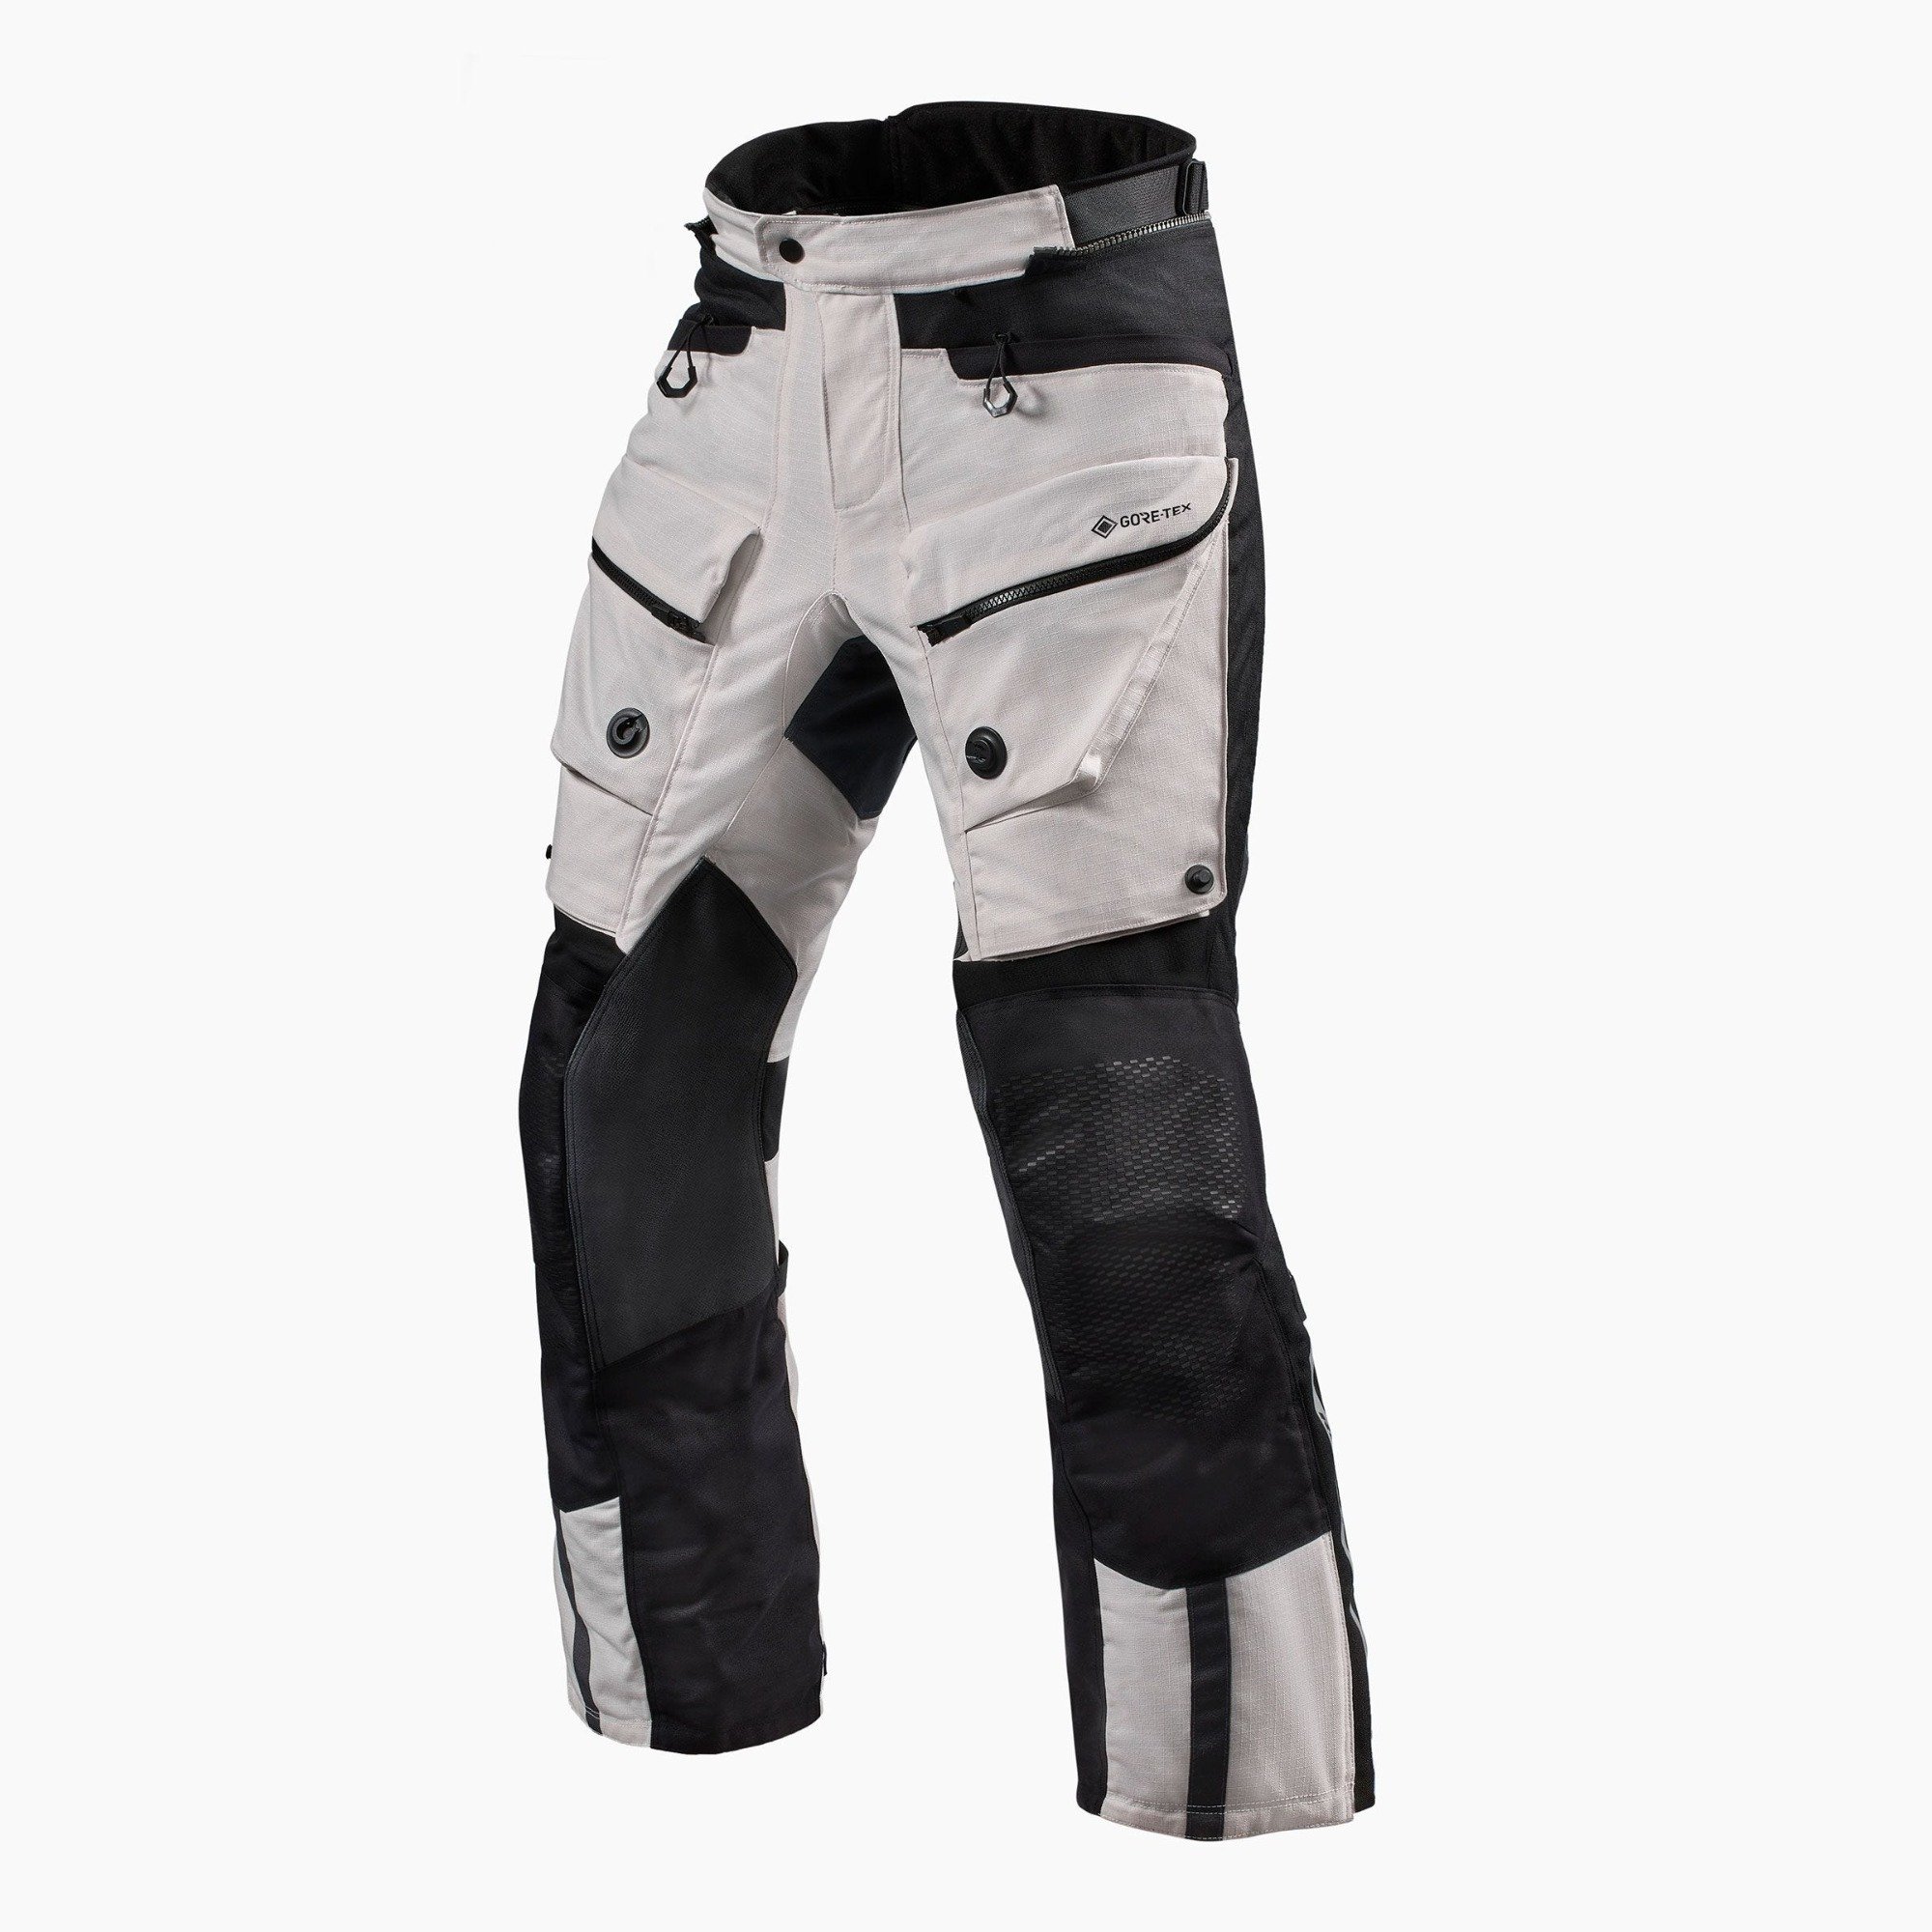 Image of REV'IT! Trousers Defender 3 GTX Silver Black Short Motorcycle Pants Size 2XL EN